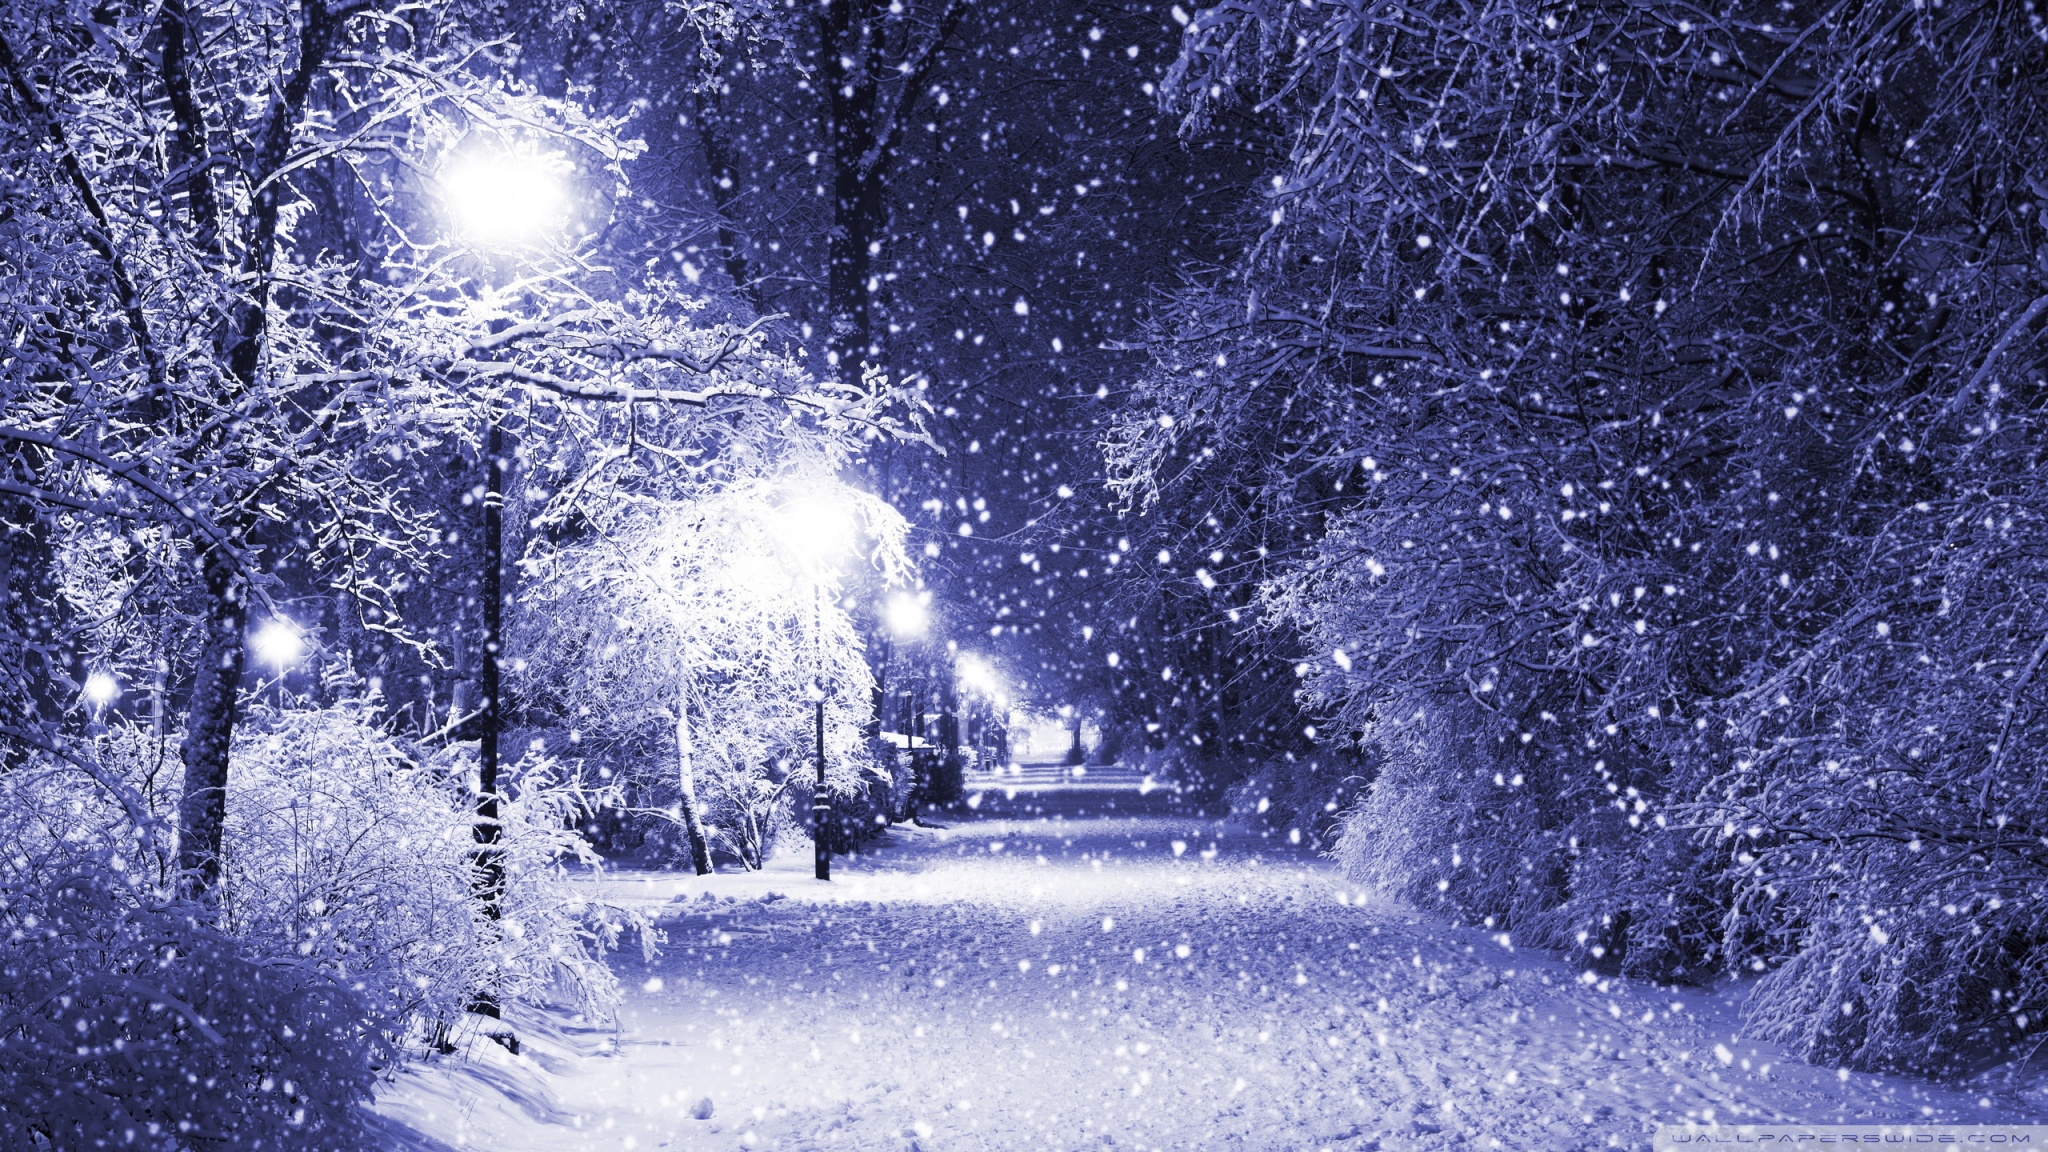 Download 21 winter-wonderland-iphone-wallpaper Winter-iPhone-Wallpapers-28-Cute-Winter-iPhone-Backgrounds-.jpg